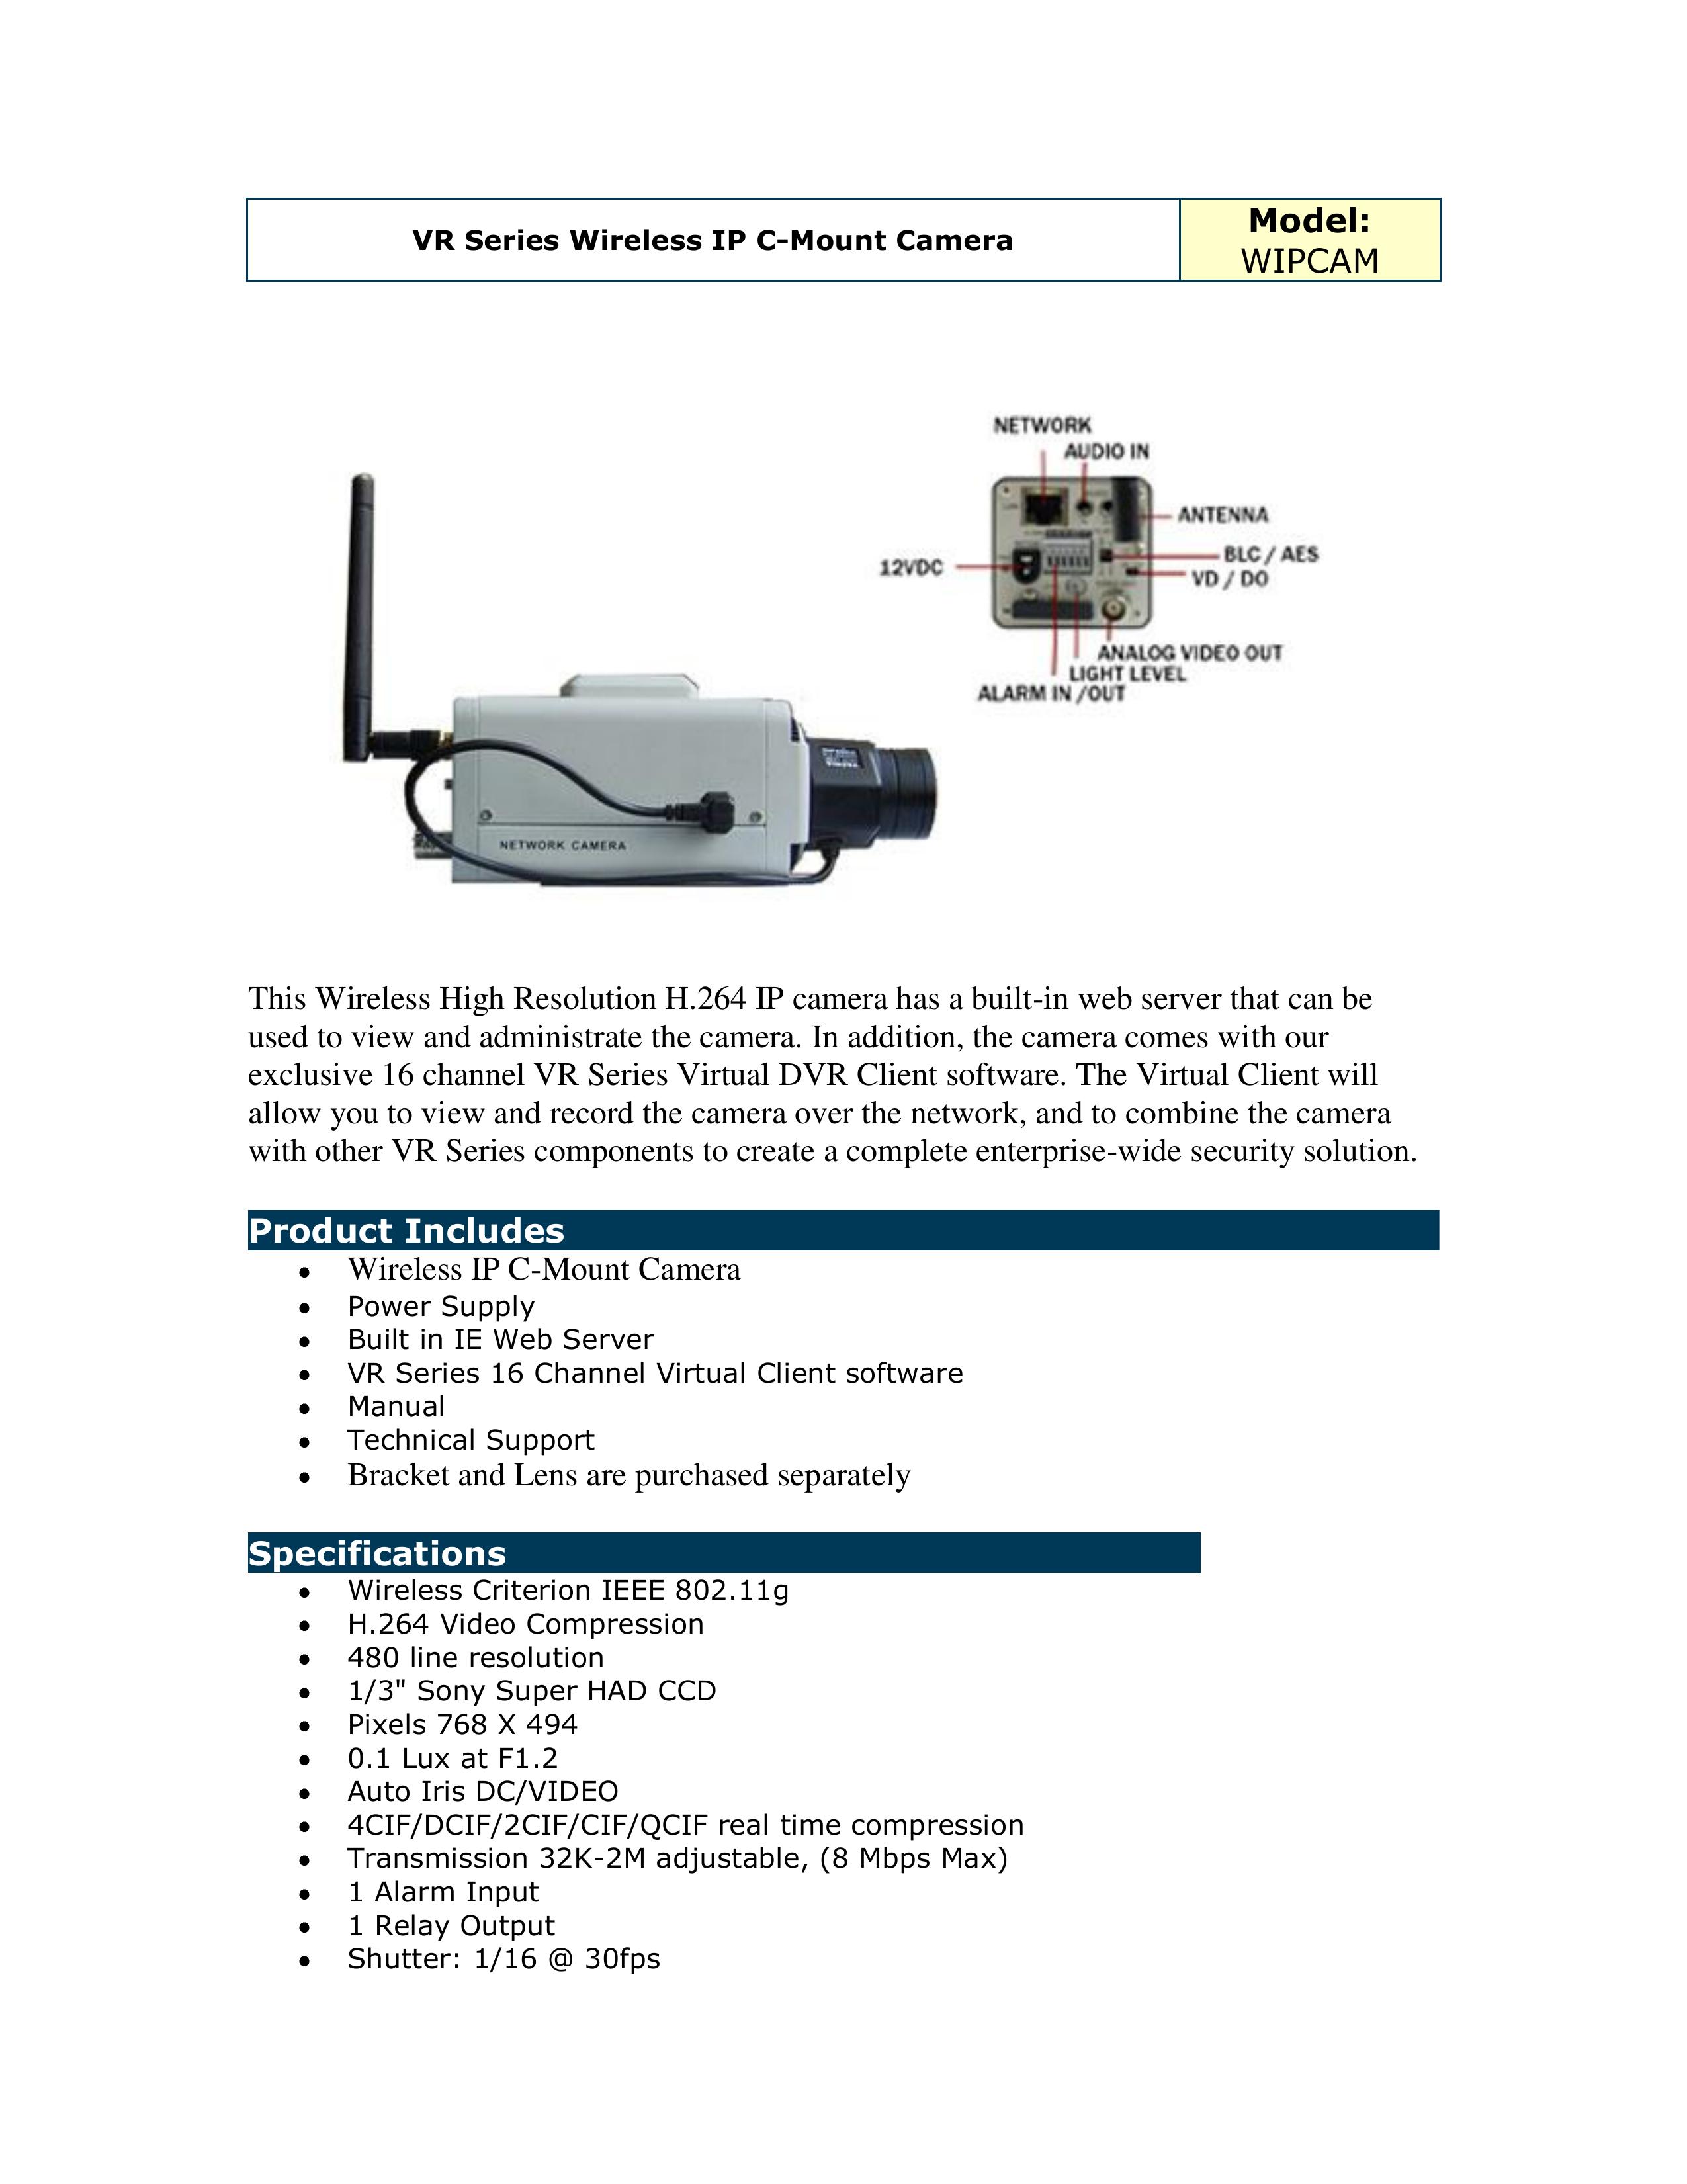 Optiview WIPCAM Security Camera User Manual